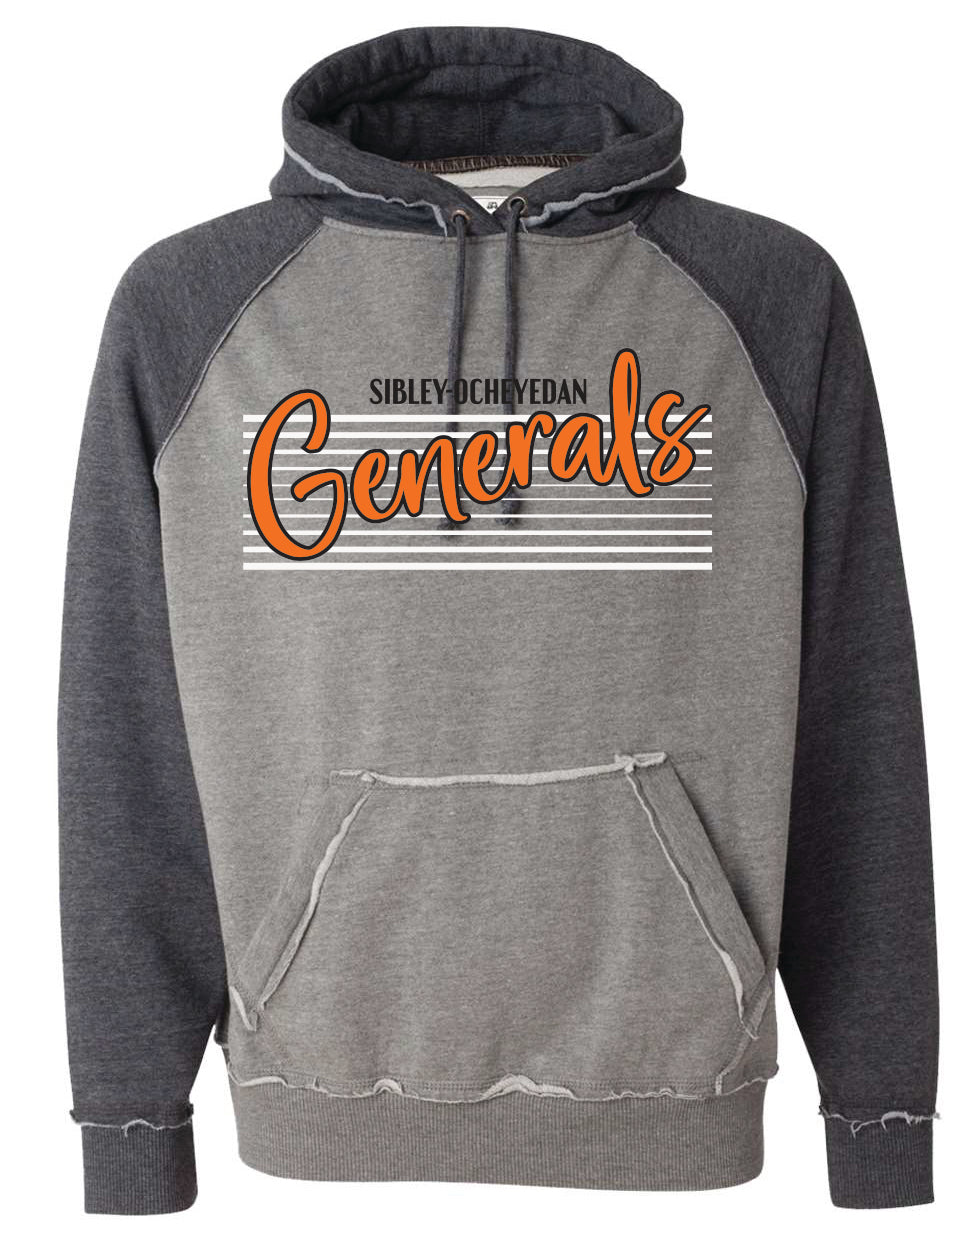 S-O Athletic Booster Club G4 Generals Design J America Vintage Hooded Sweatshirt